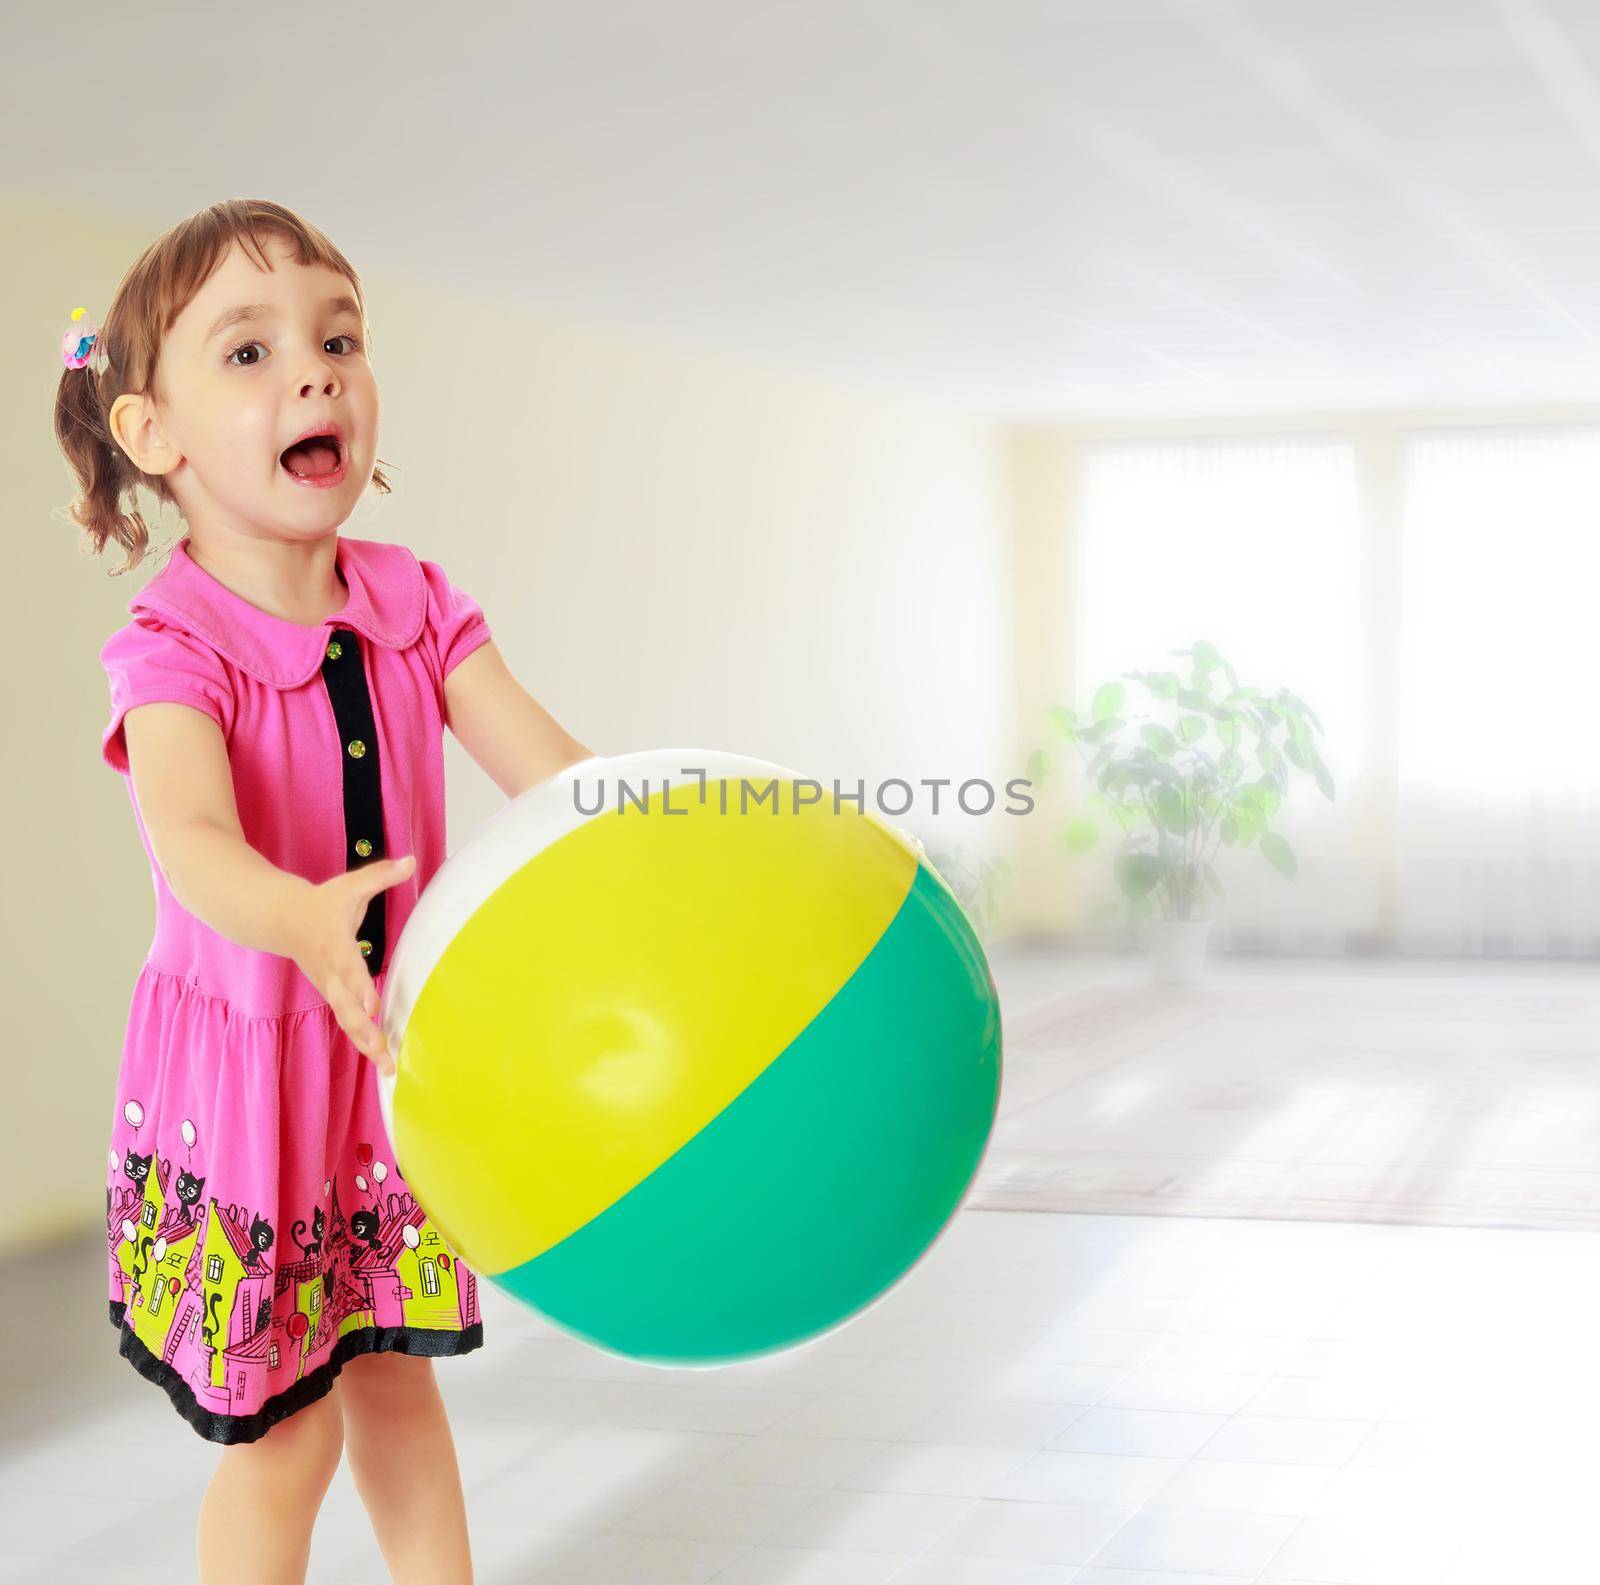 Little girl catches the ball by kolesnikov_studio